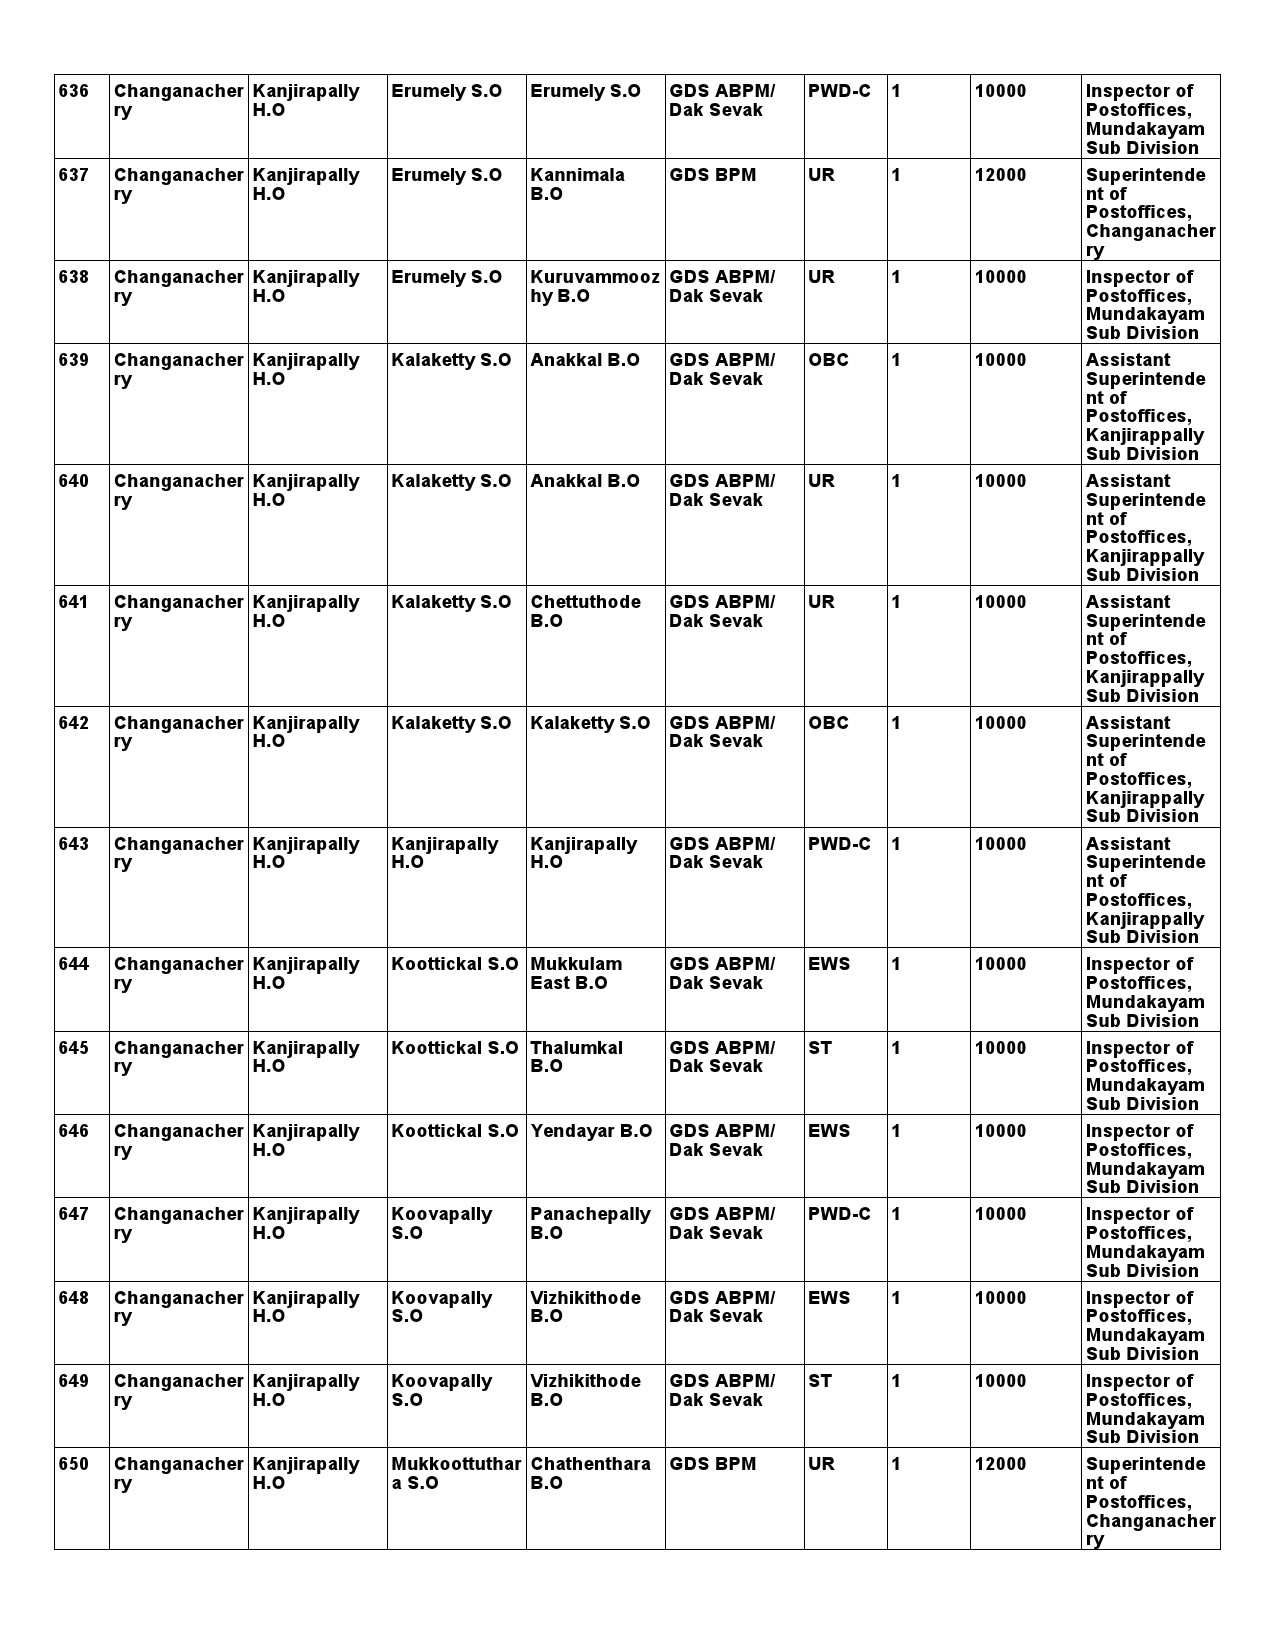 Kerala Postal Circle GDS Recruitment 2021 notification - Notification Image 61